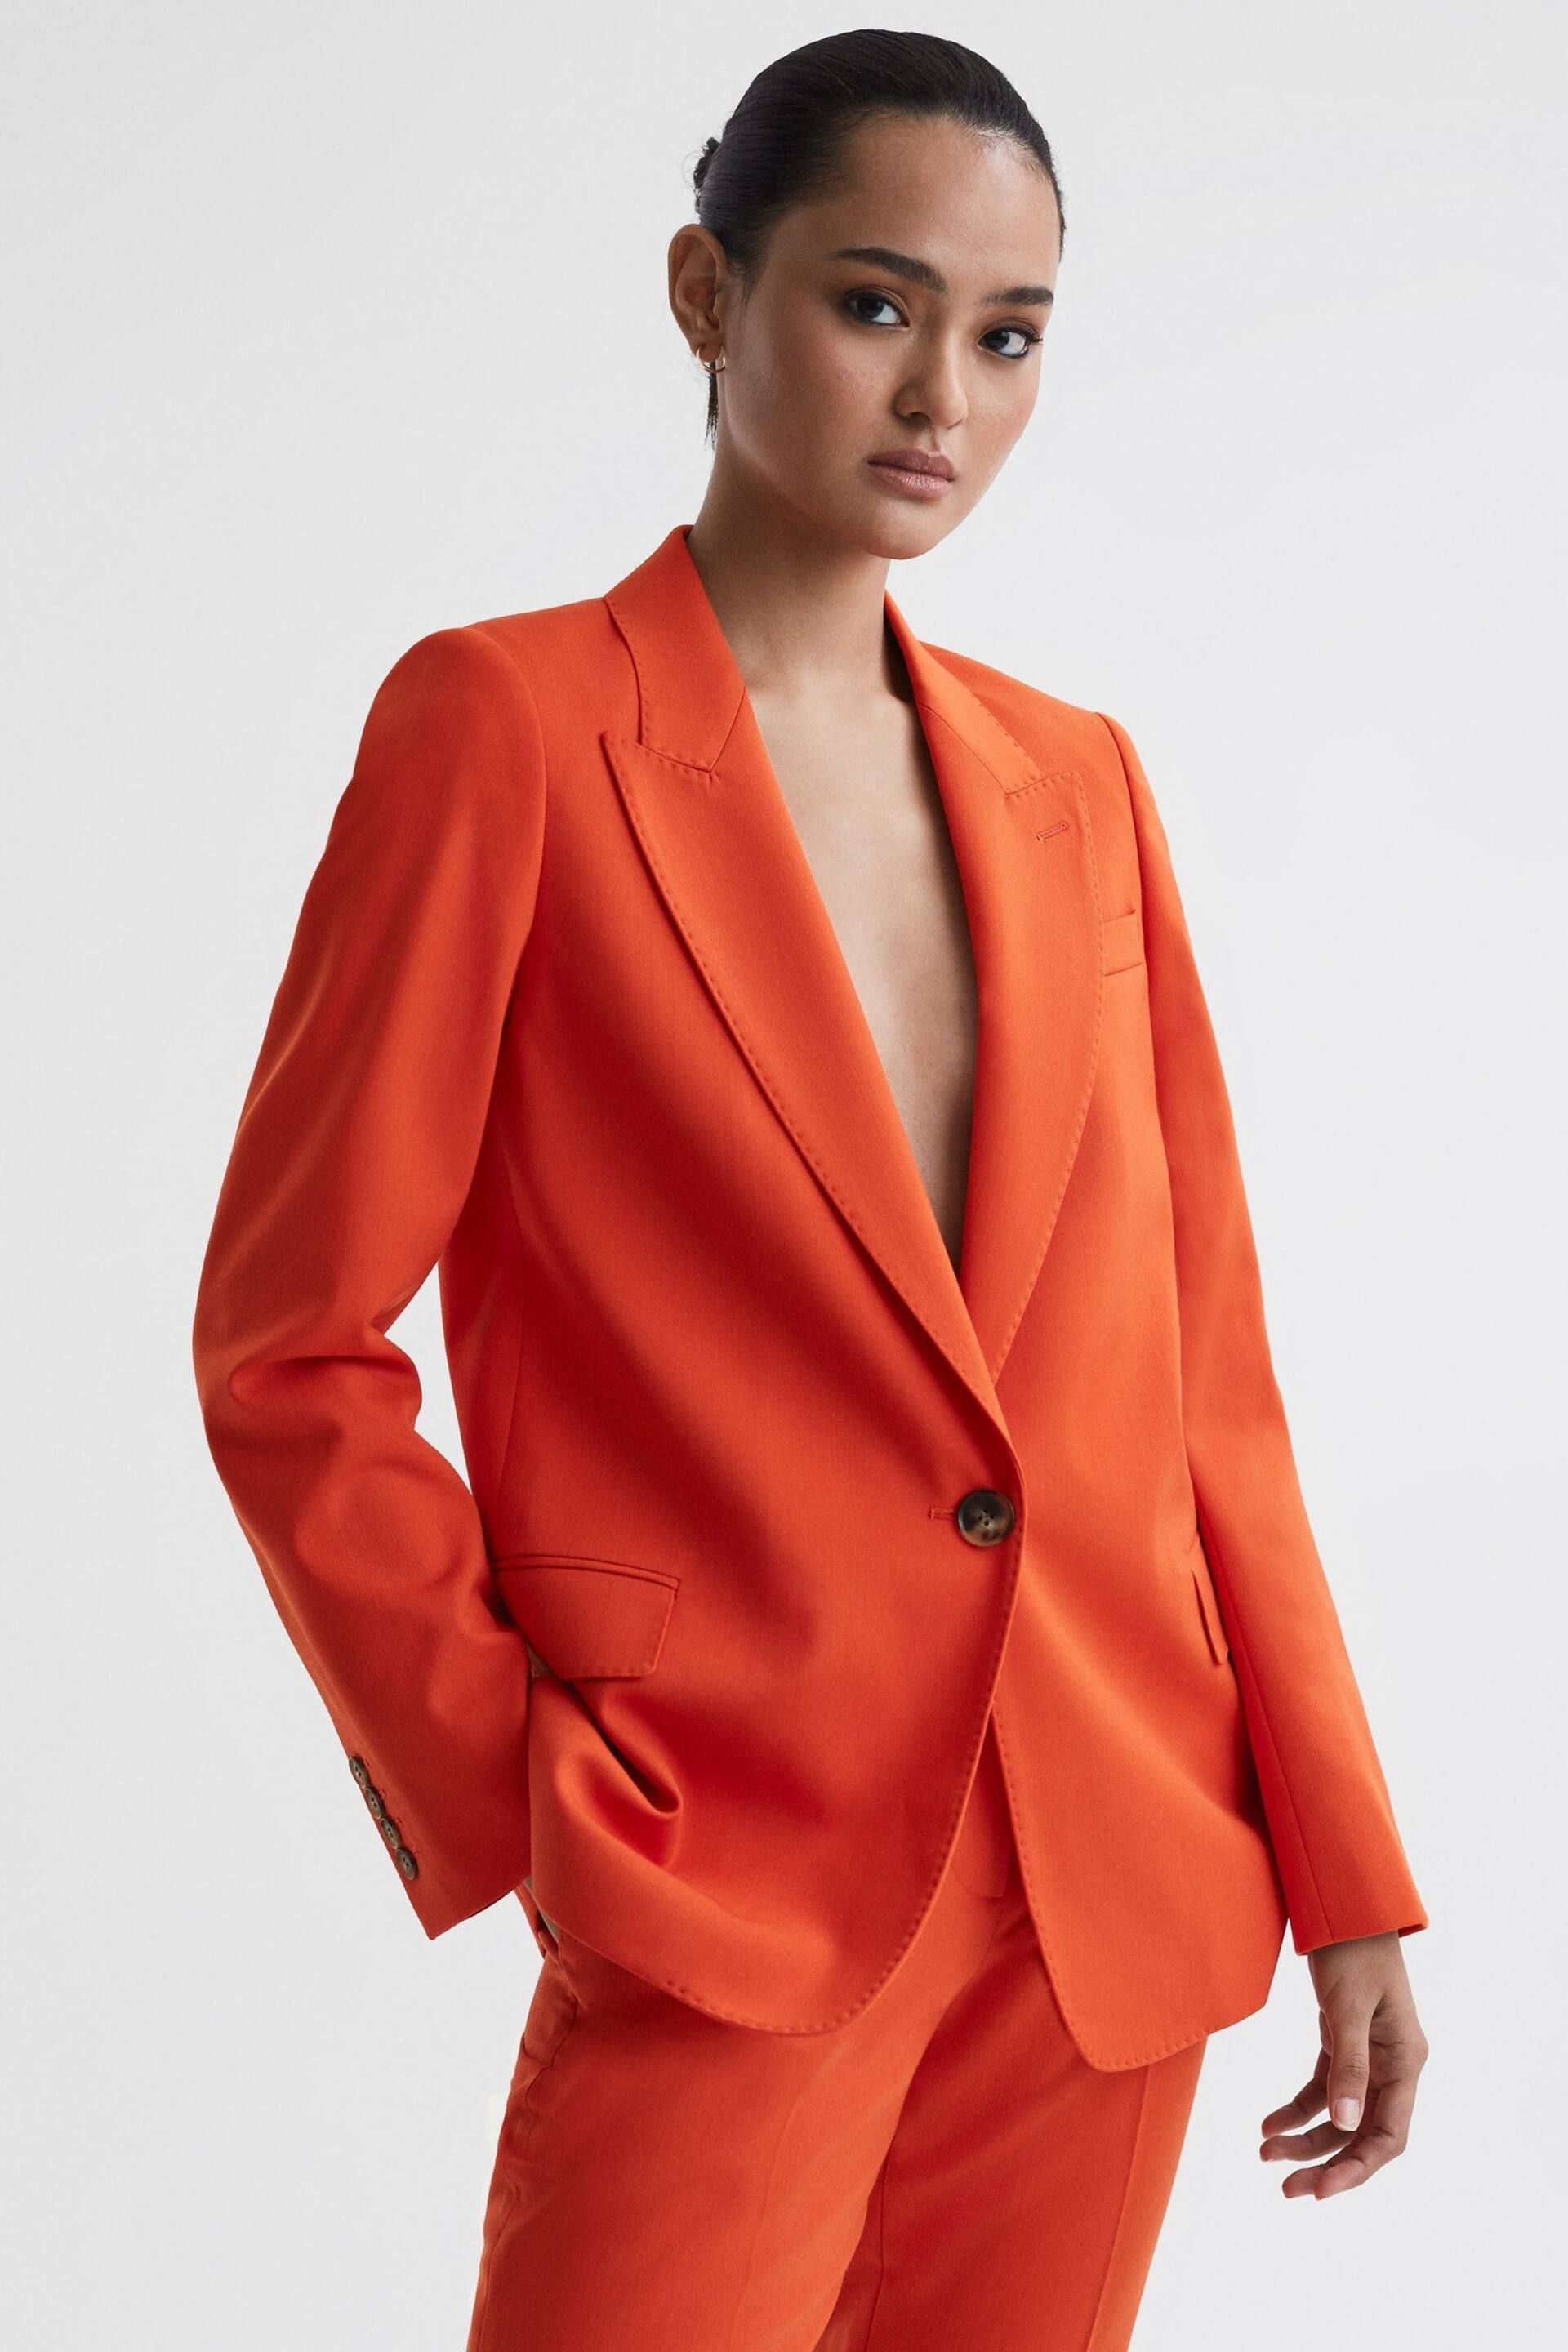 Reiss Orange Celia Tailored Fit Wool Blend Single Breasted Suit Blazer - Image 1 of 4